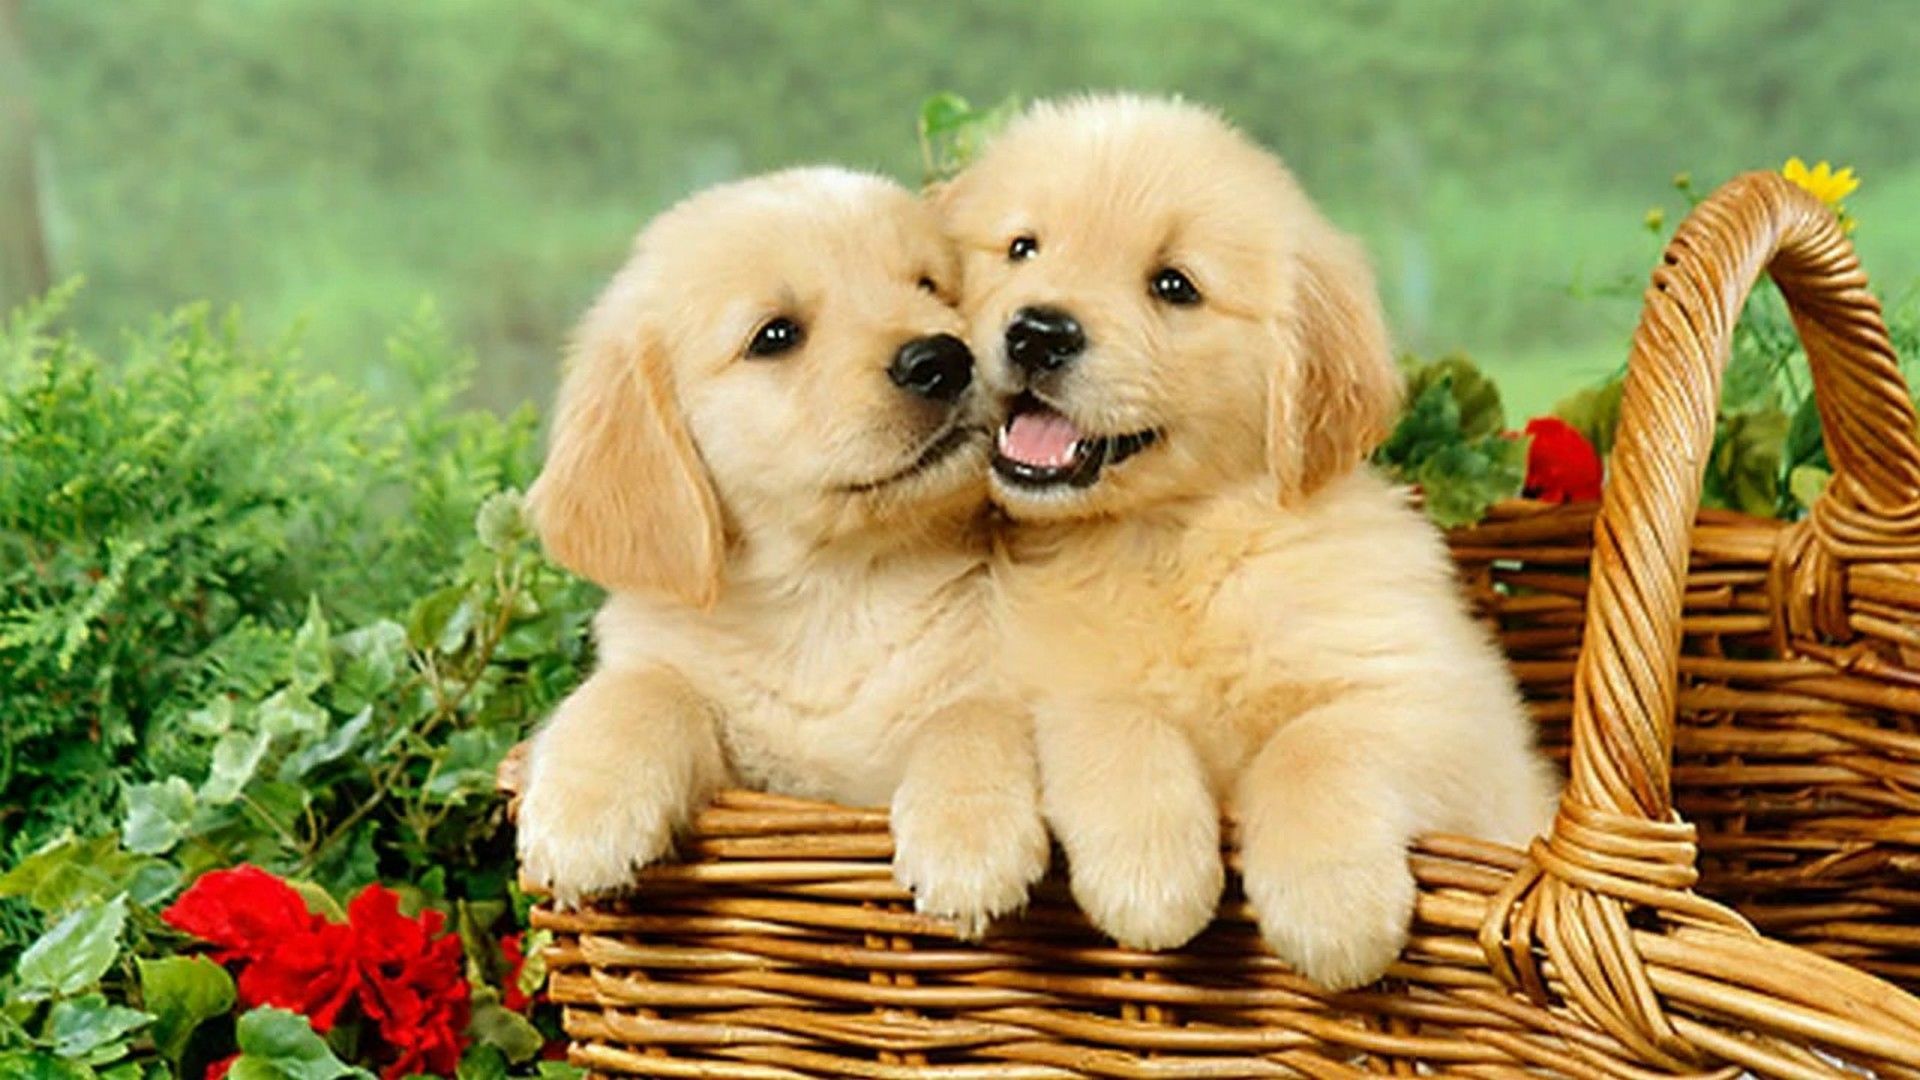 Cute Puppy Backgrounds For Desktop